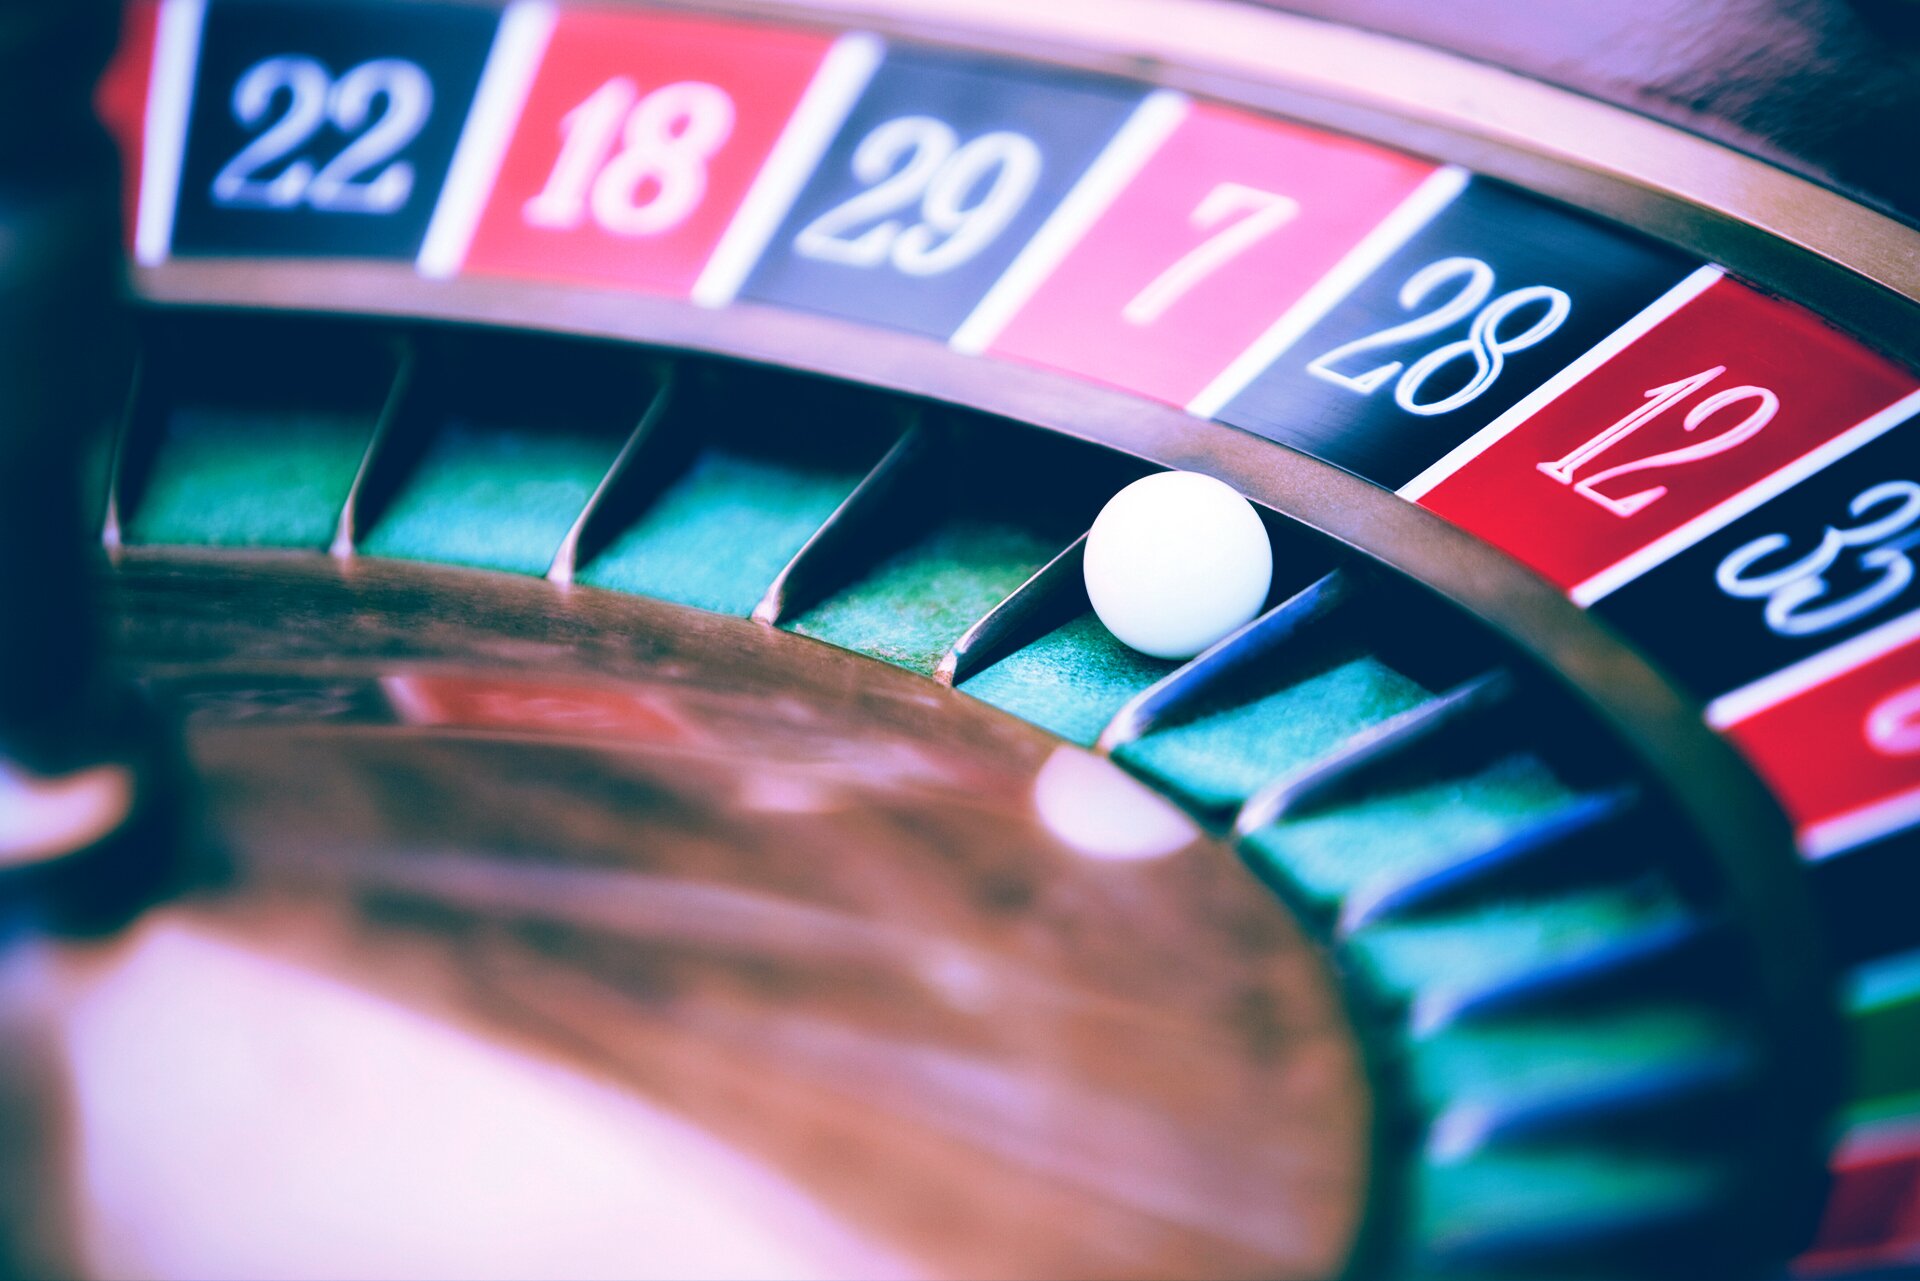 roulette app for real money